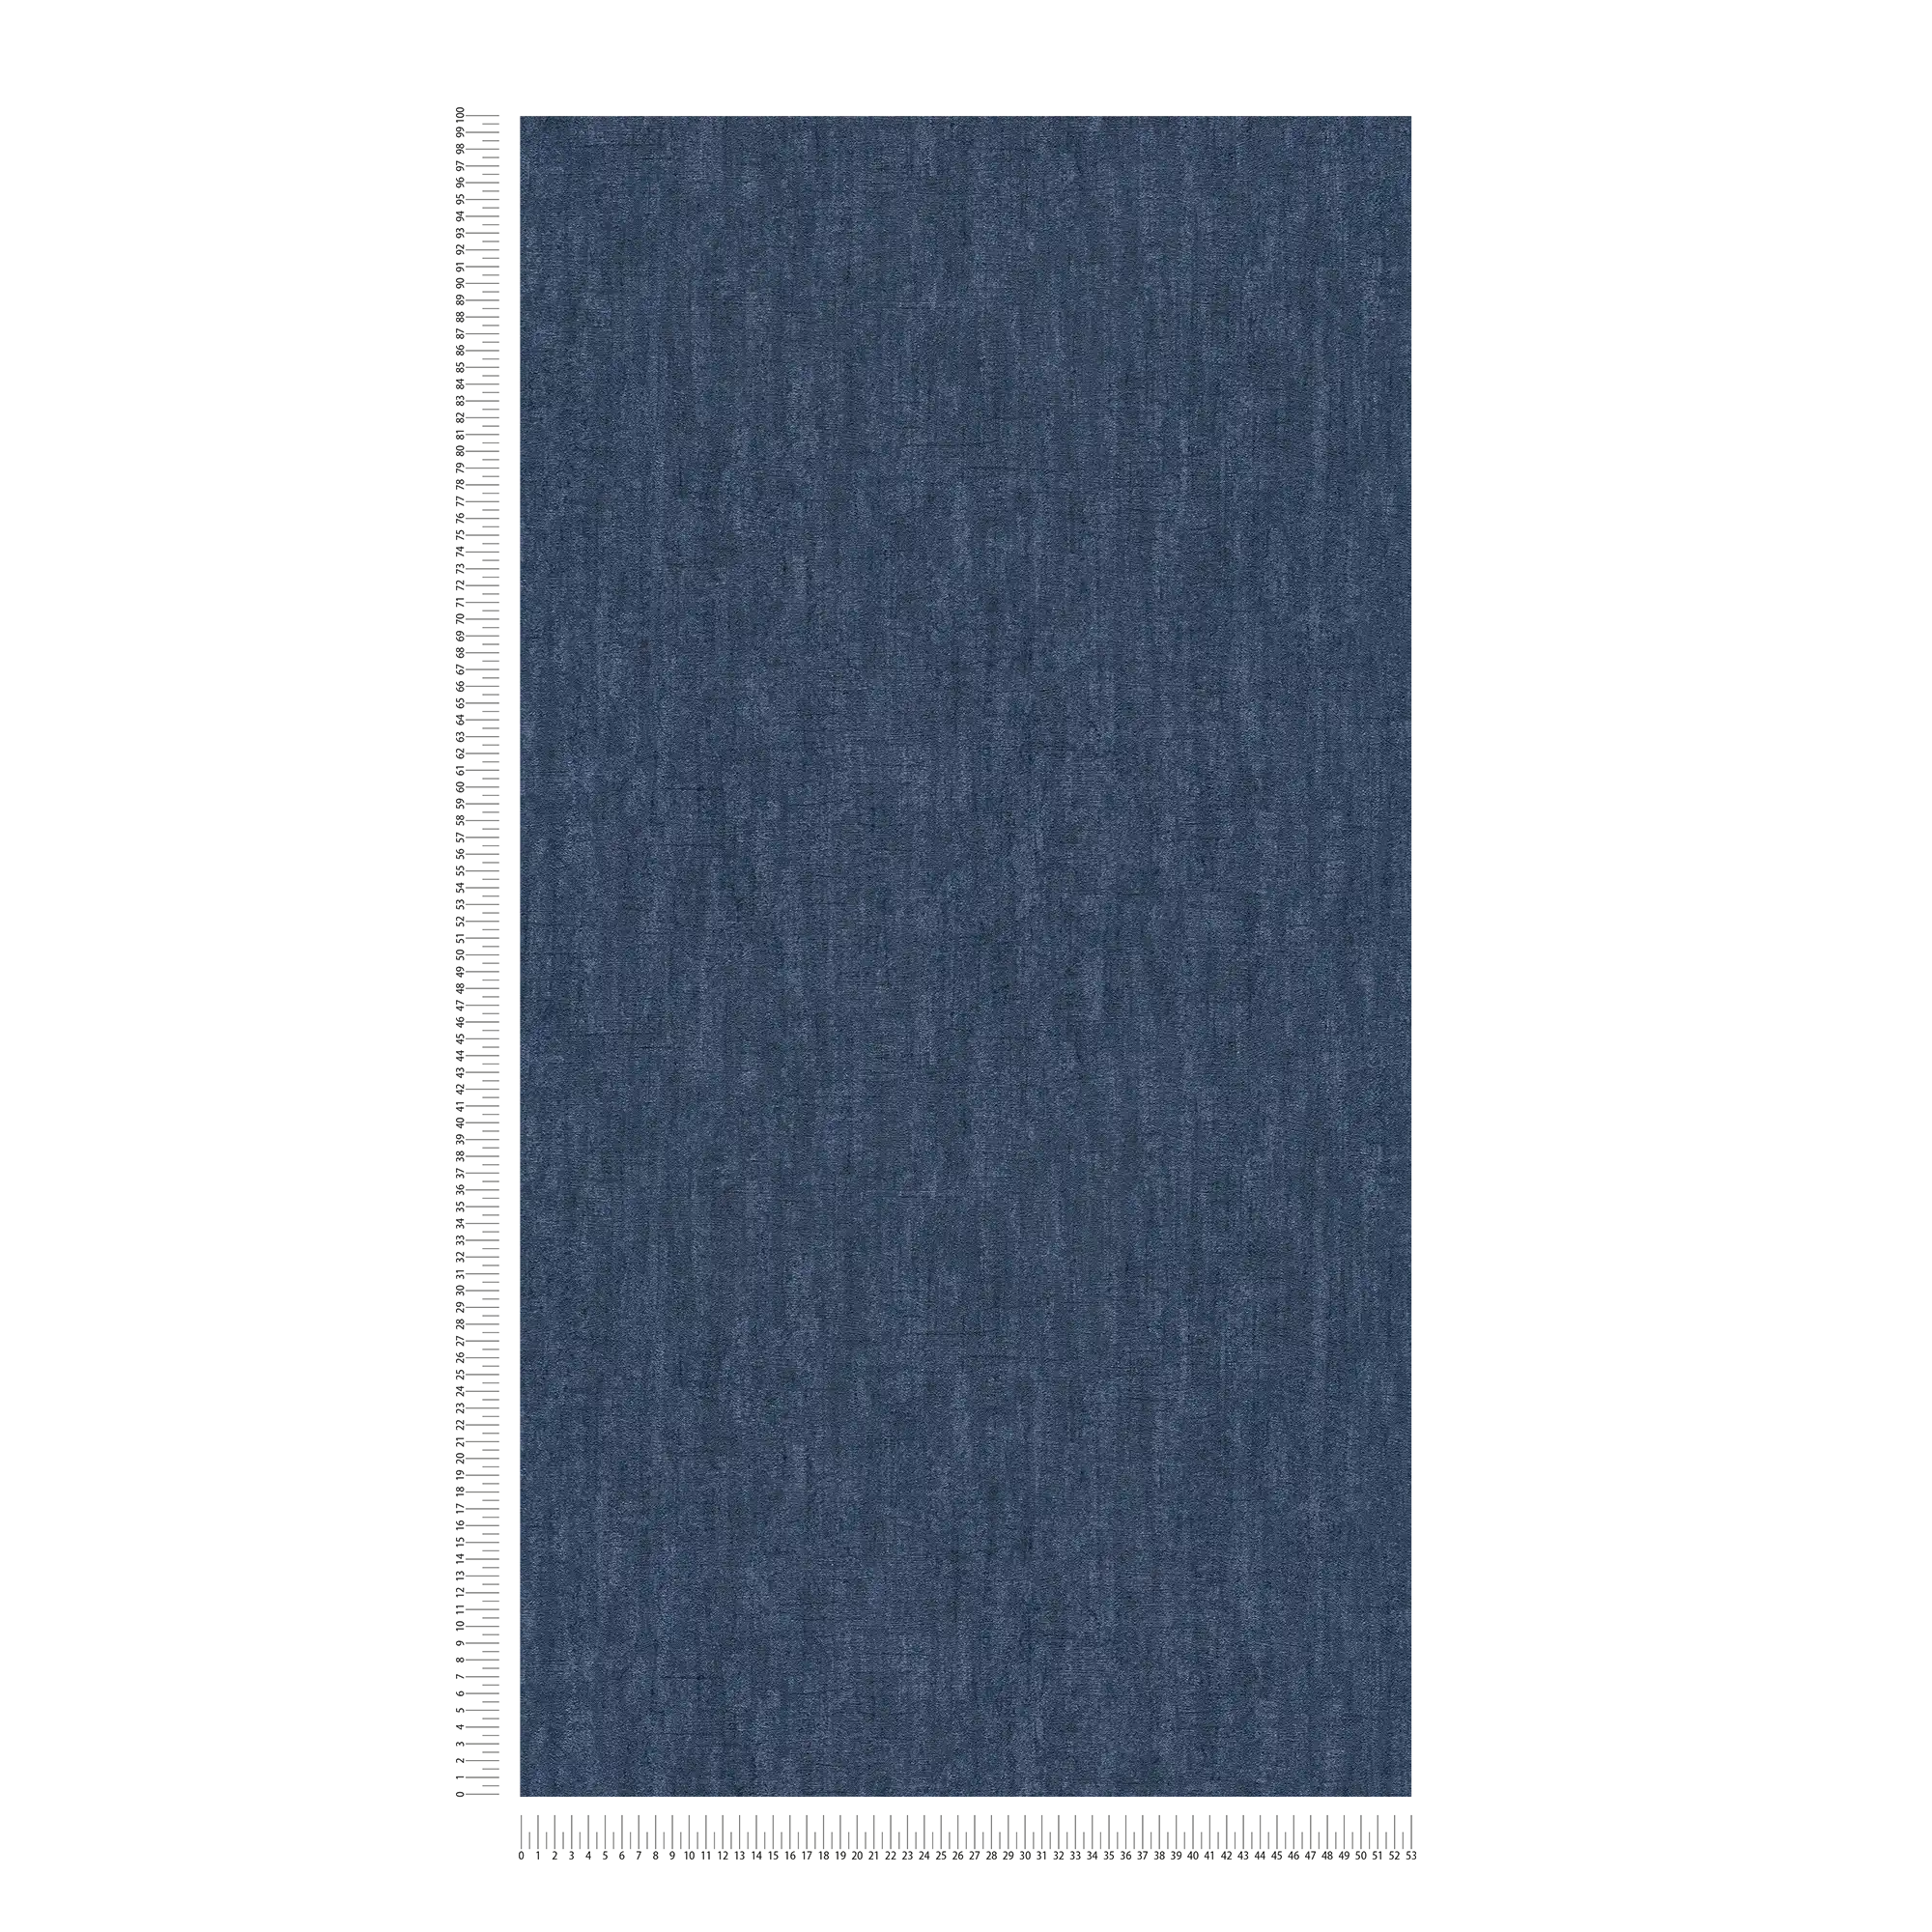             wallpaper dark blue mottled, with structure & gloss effect - blue
        